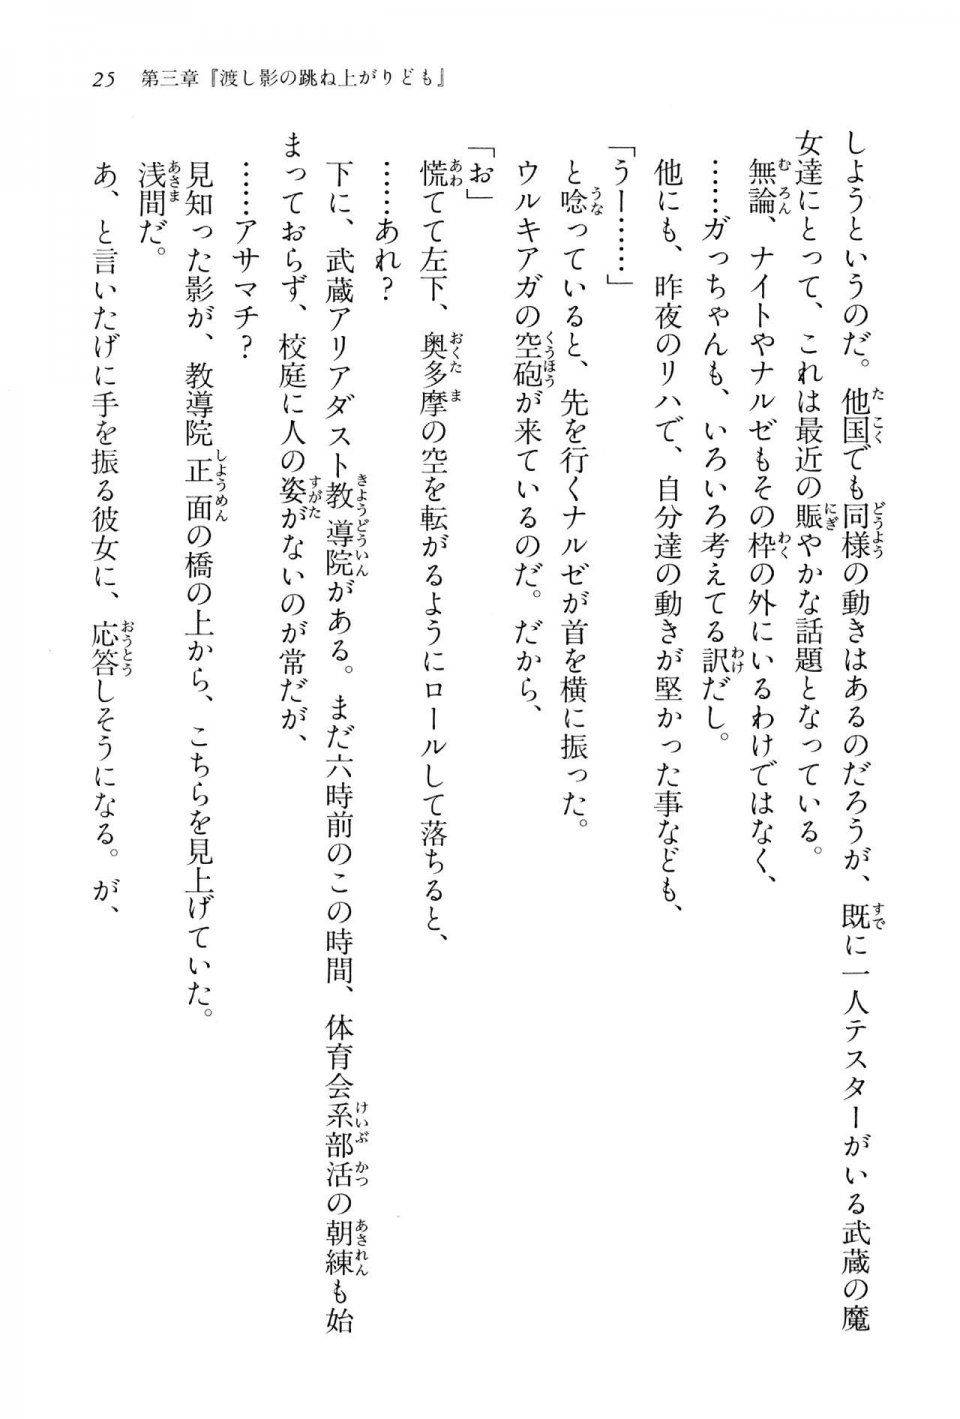 Kyoukai Senjou no Horizon BD Special Mininovel Vol 2(1B) - Photo #29